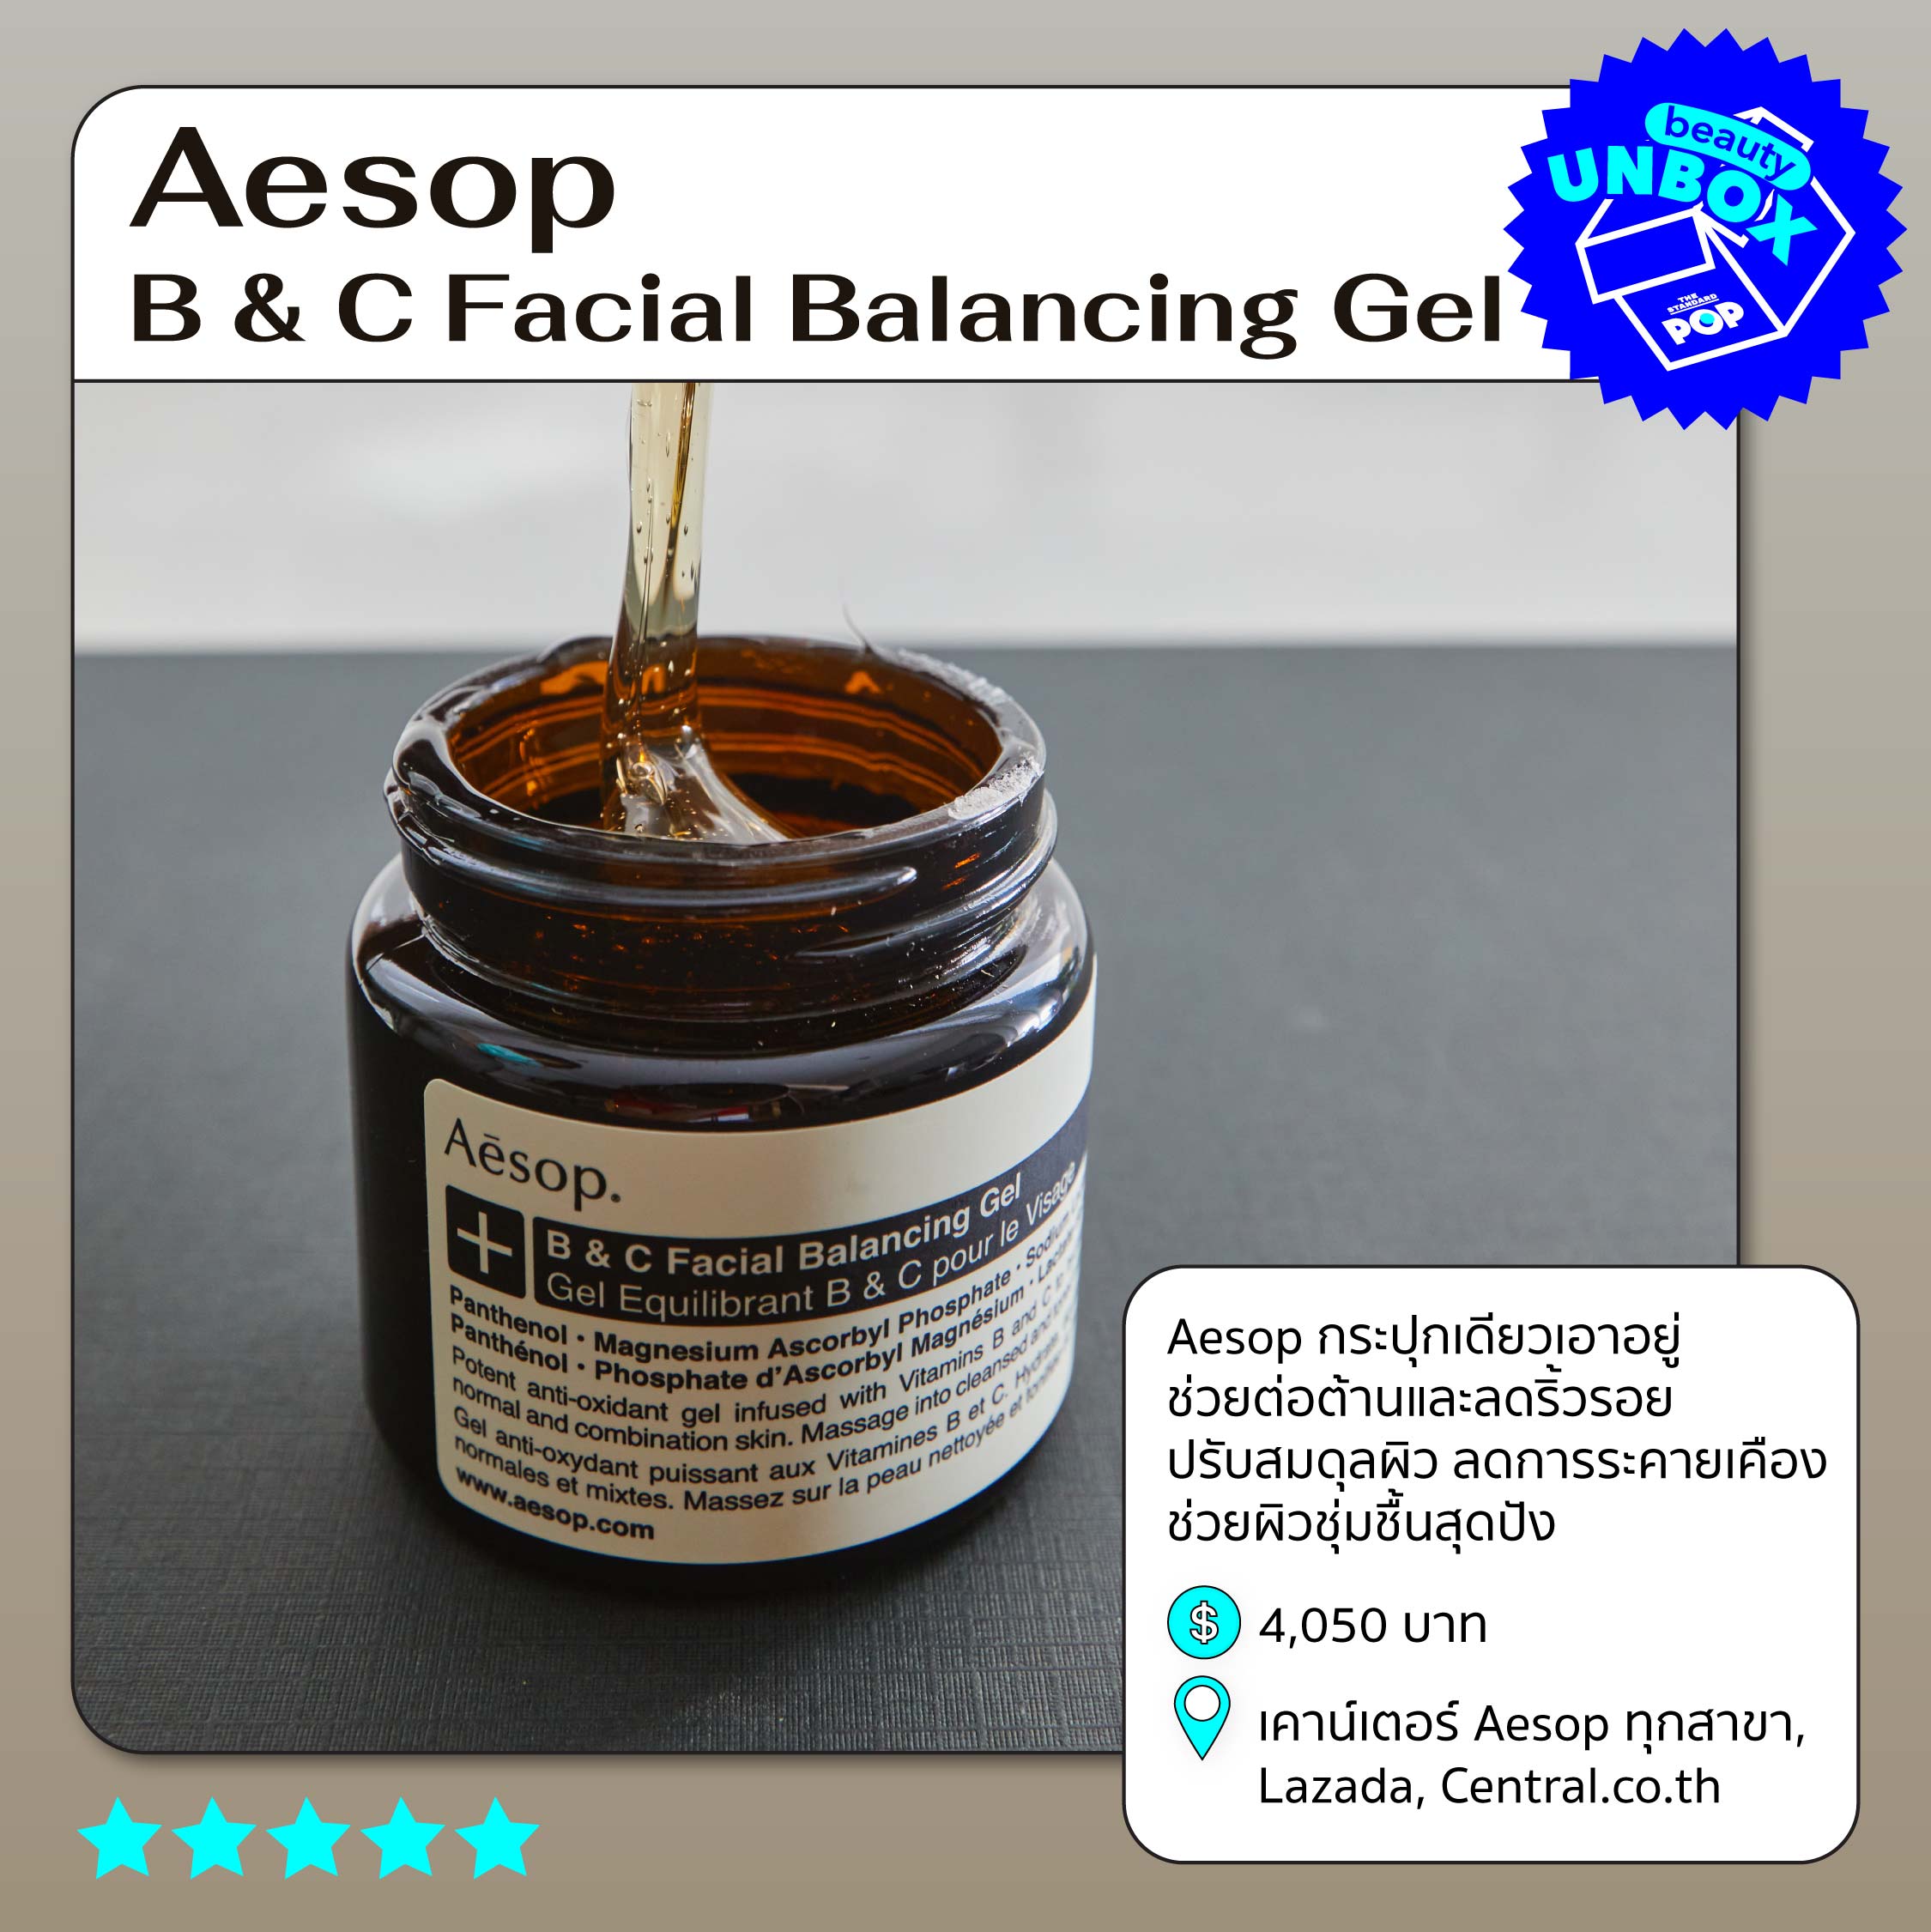 Aesop B & C Facial Balancing Gel